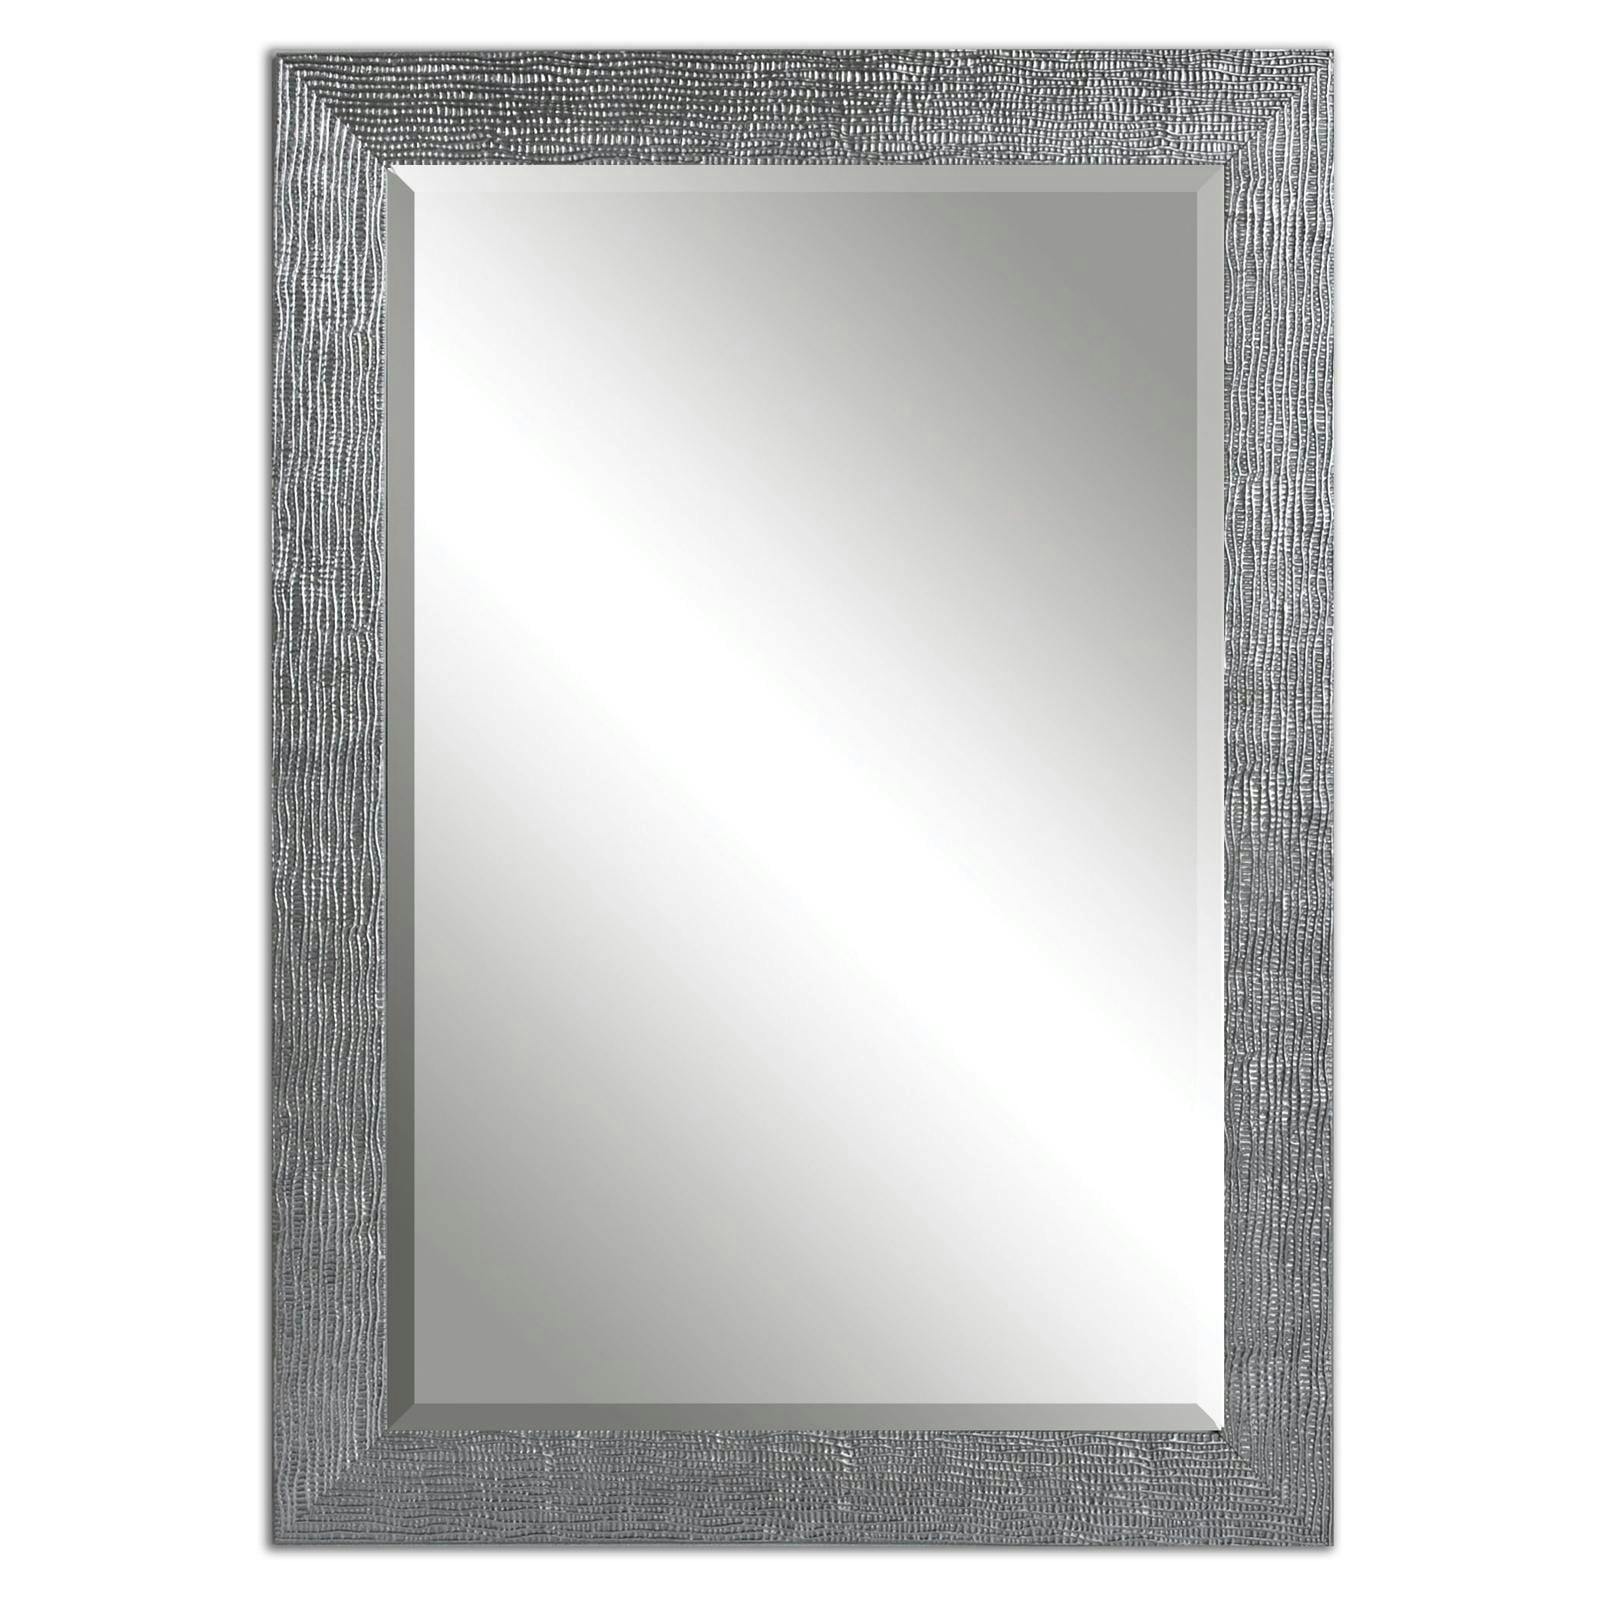 Tarek Contemporary Silver Wood Rectangular Wall Mirror